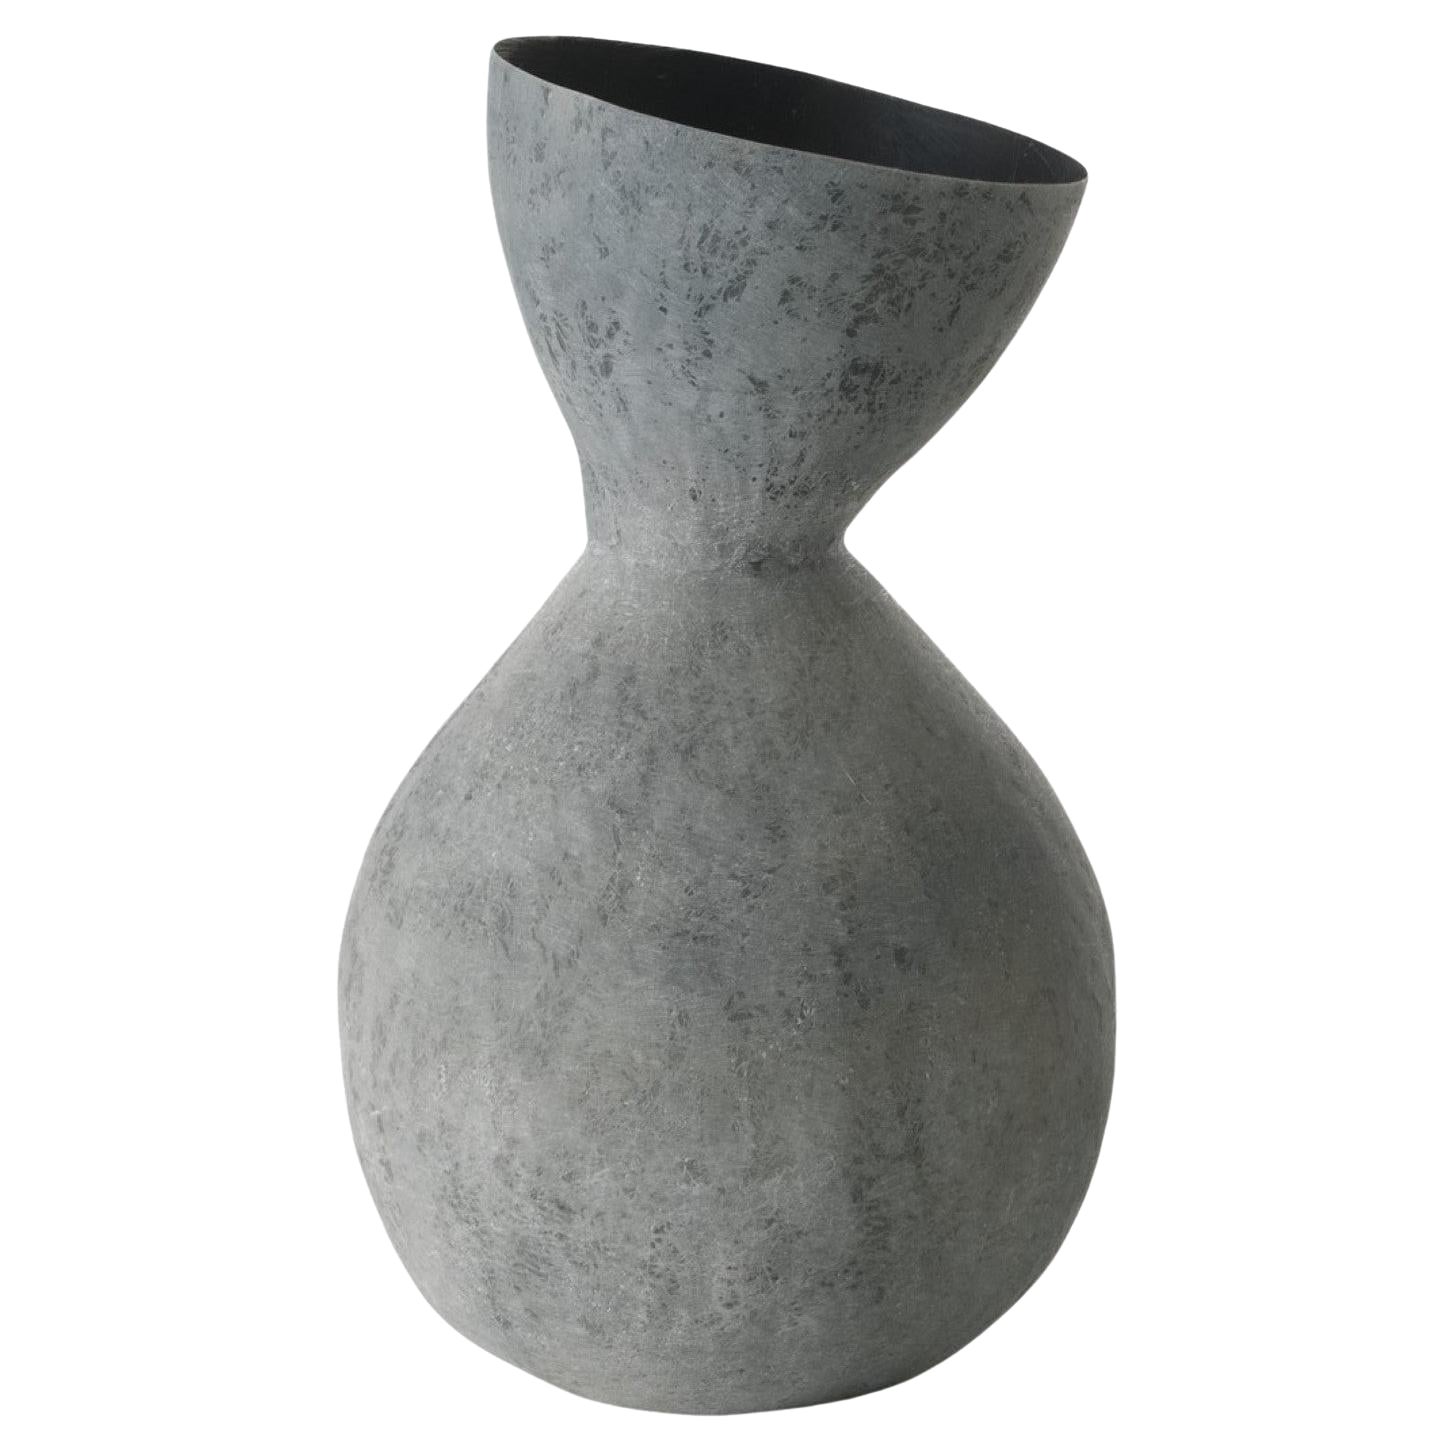 Incline Vase by Imperfettolab